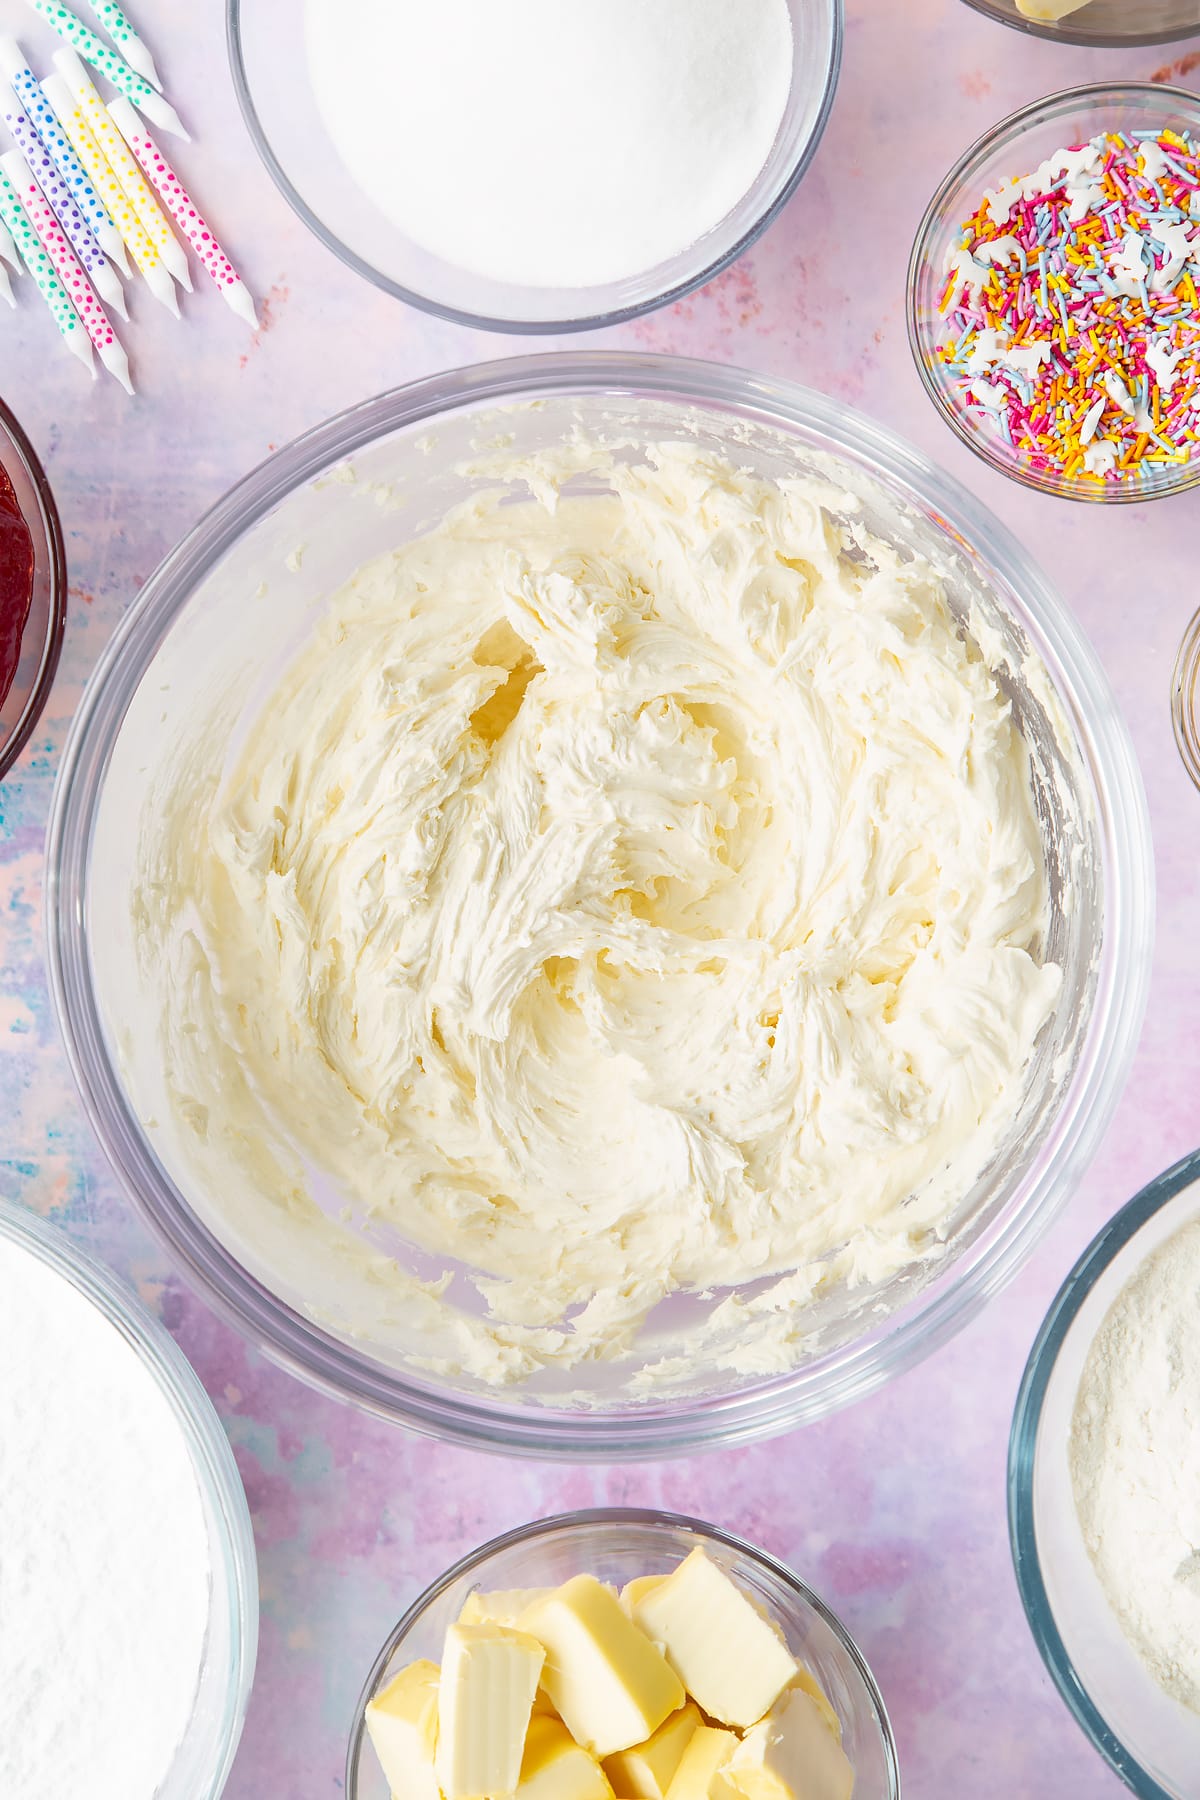 Vegan buttercream frosting in a glass mixing bowl. Ingredients to make vegan birthday cake surround the bowl.